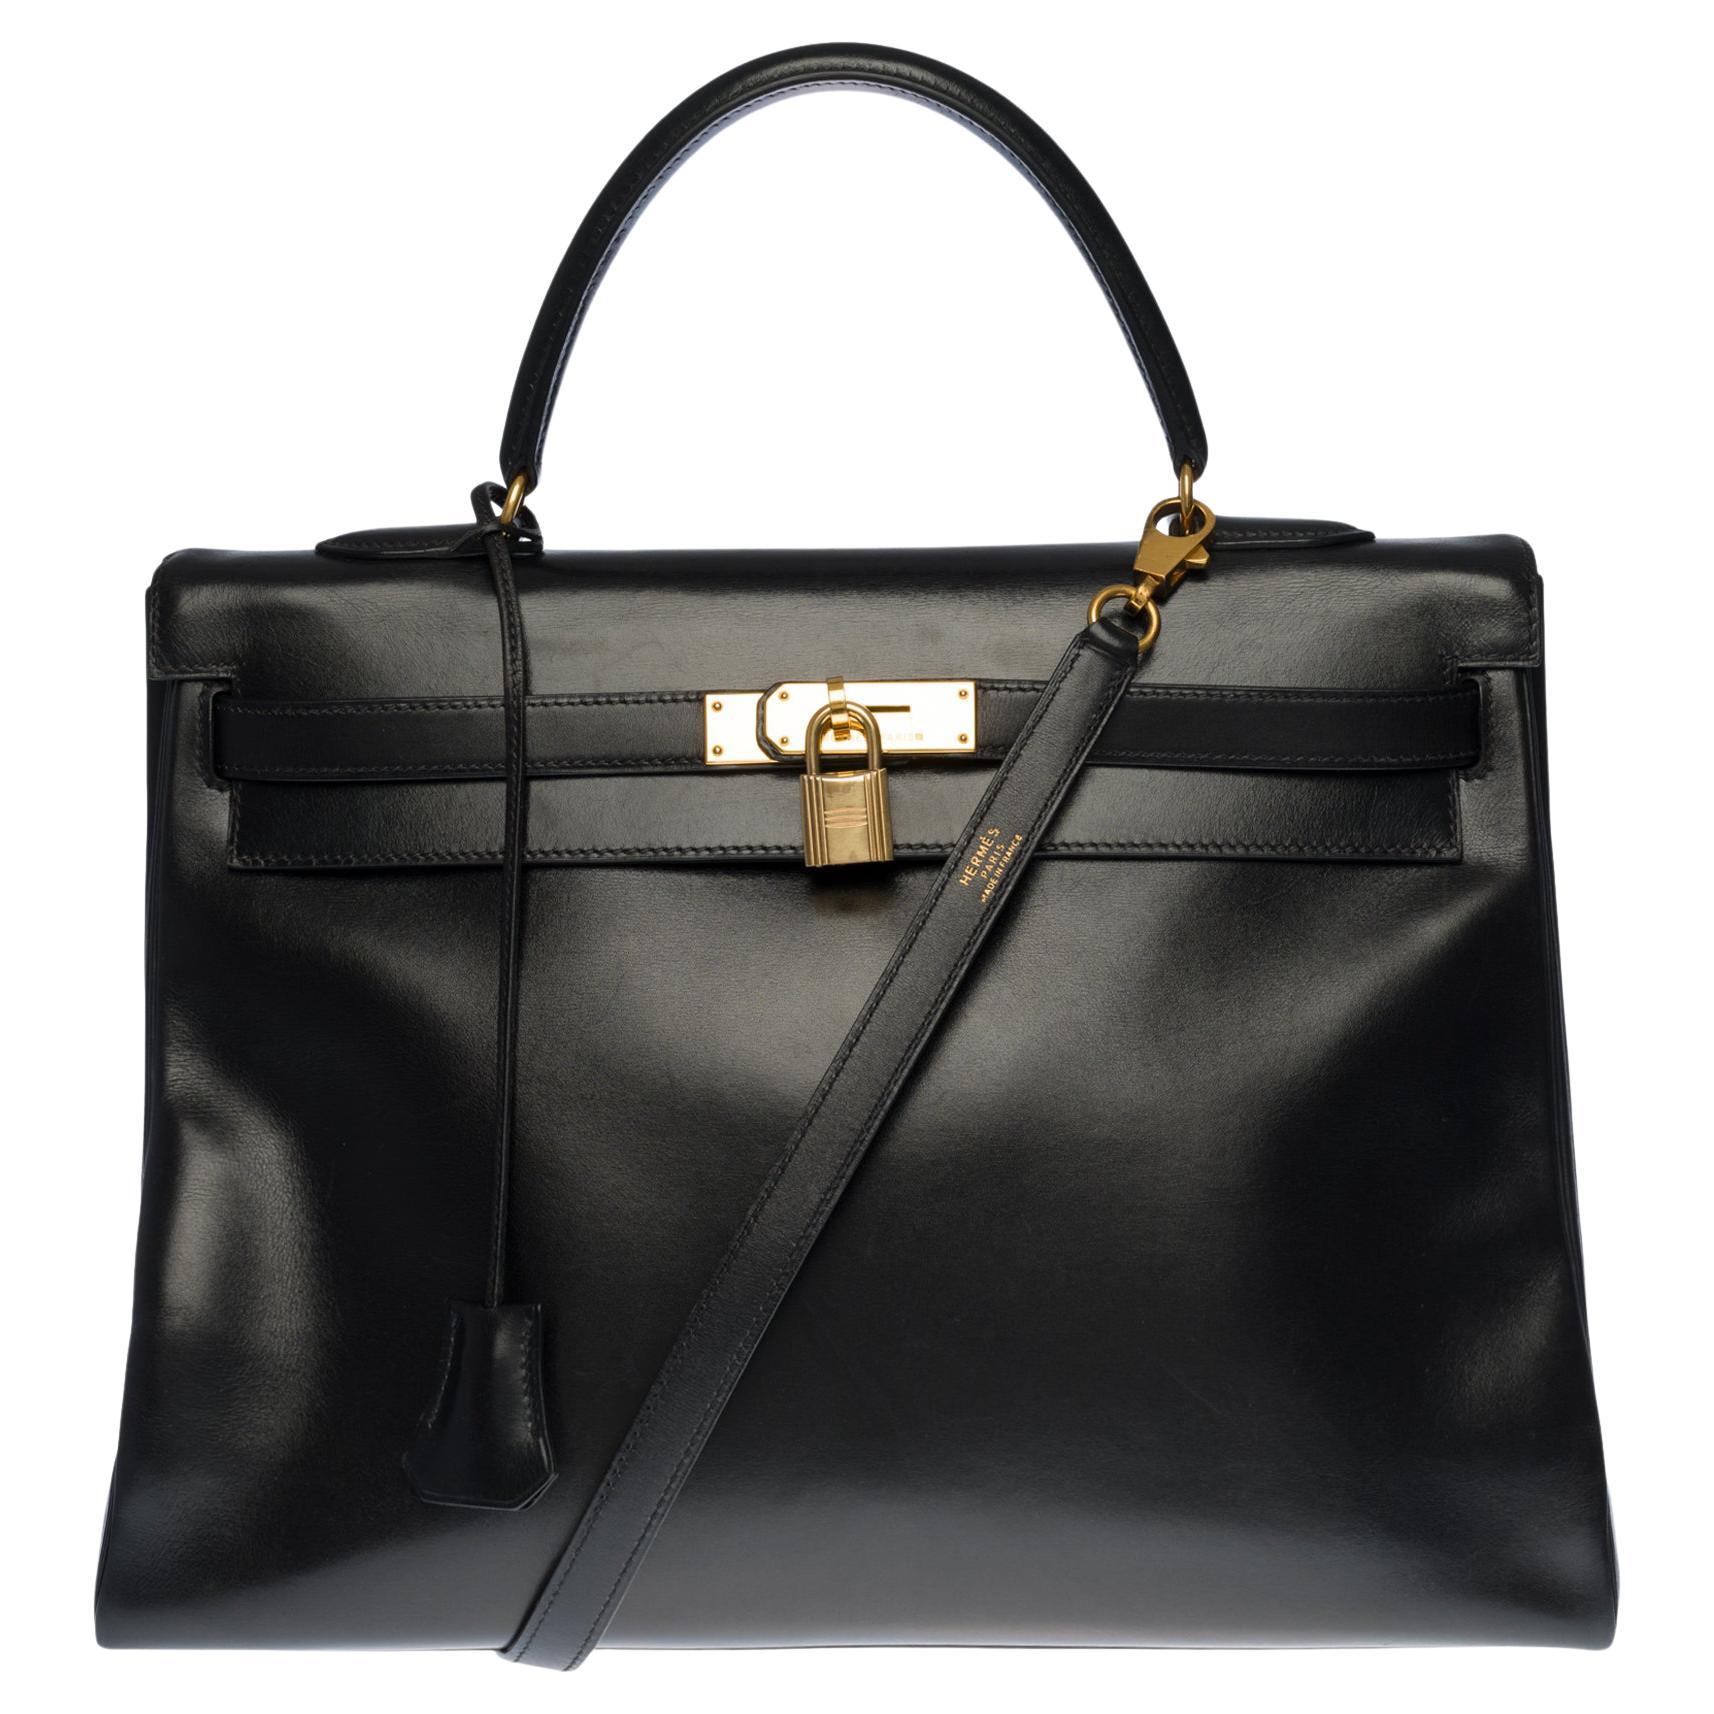 Hermès Kelly 35 retourné handbag with strap in Black Calf leather, GHW